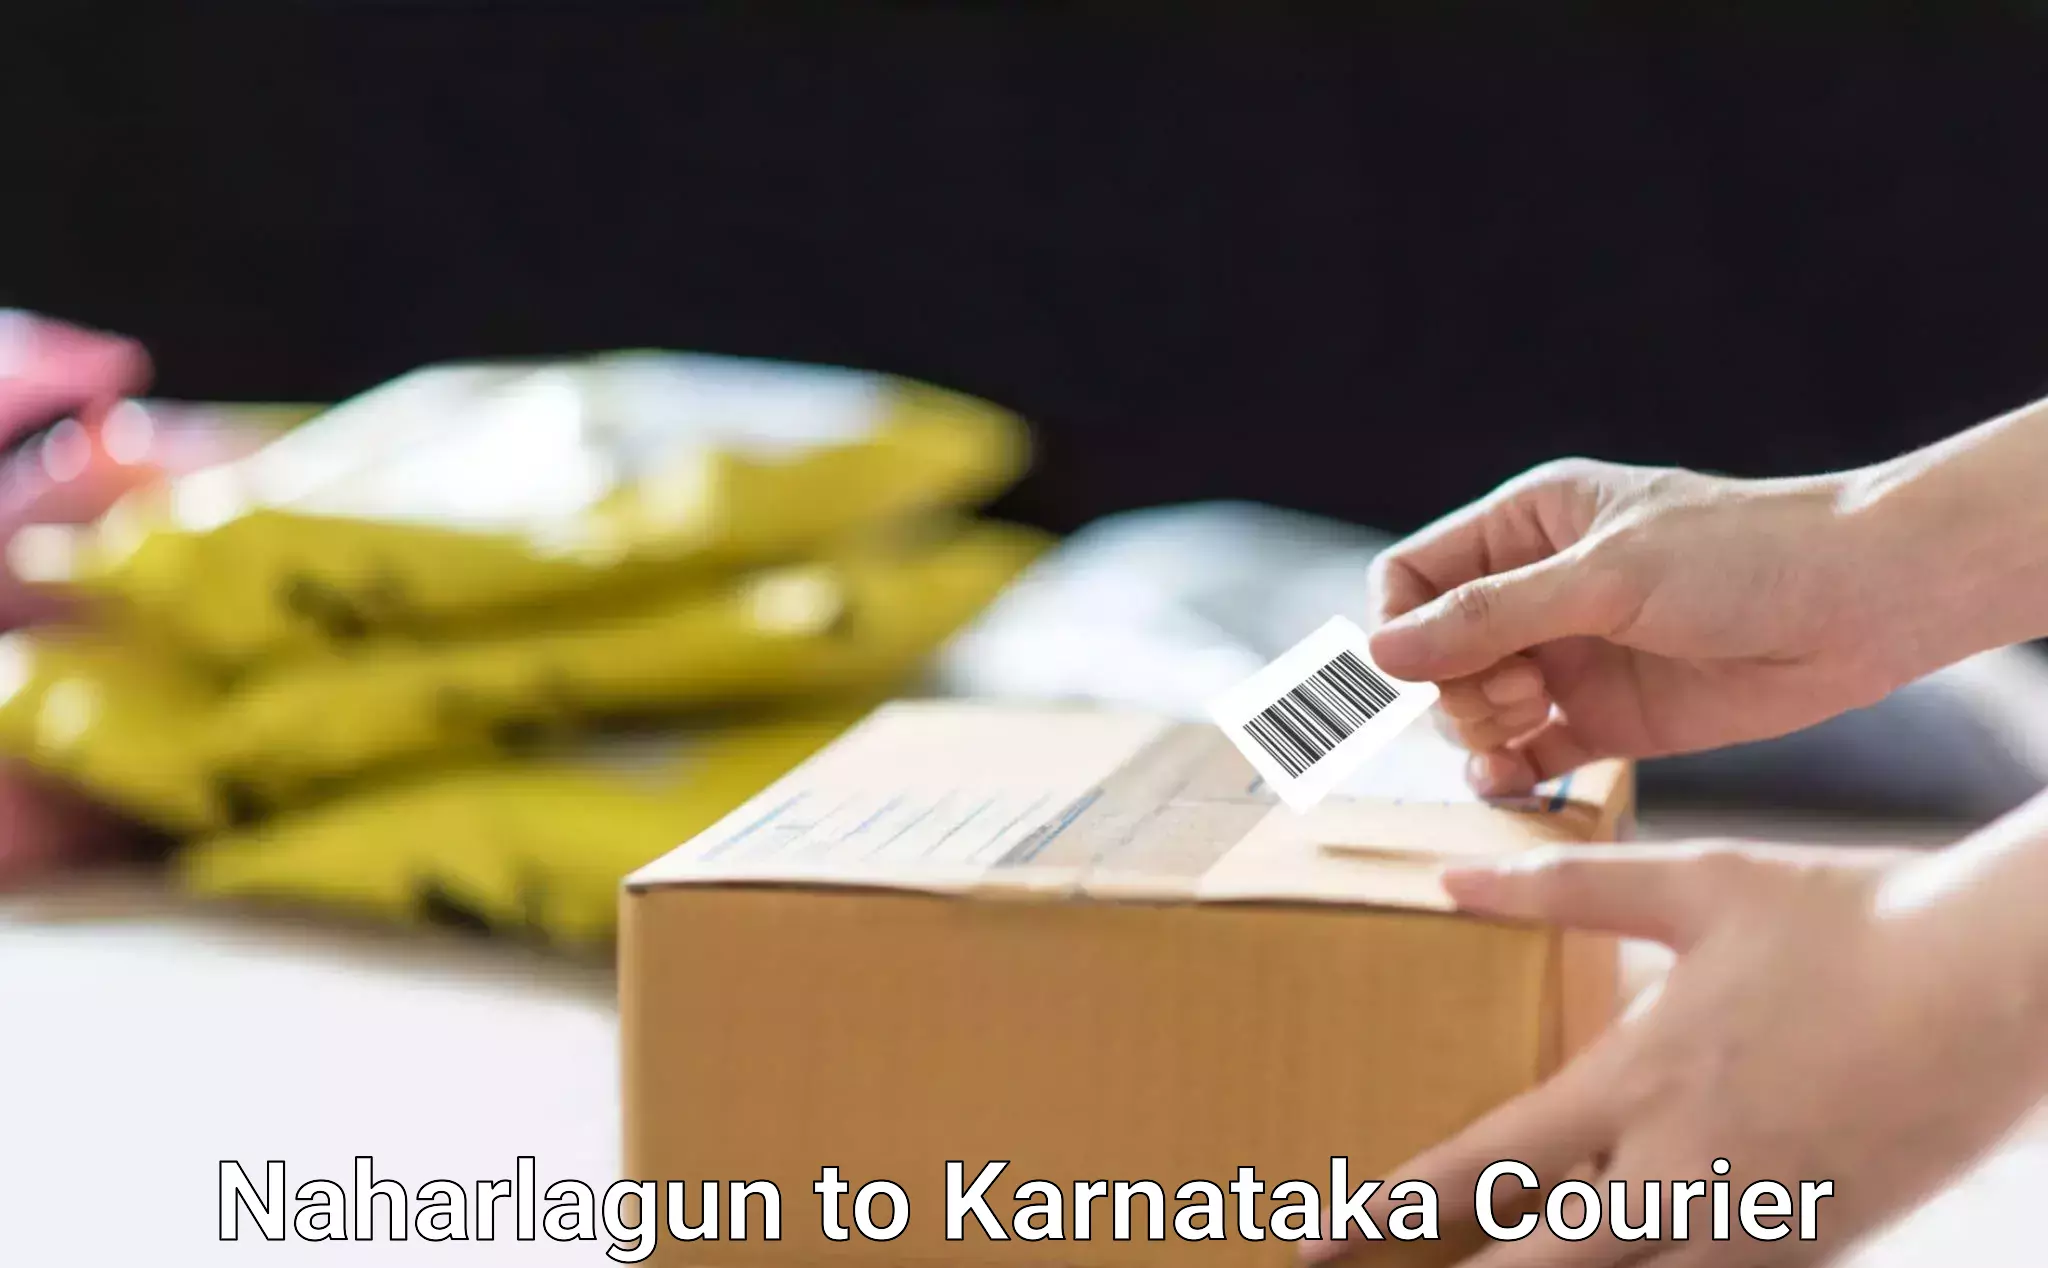 Next-day delivery options Naharlagun to Karnataka